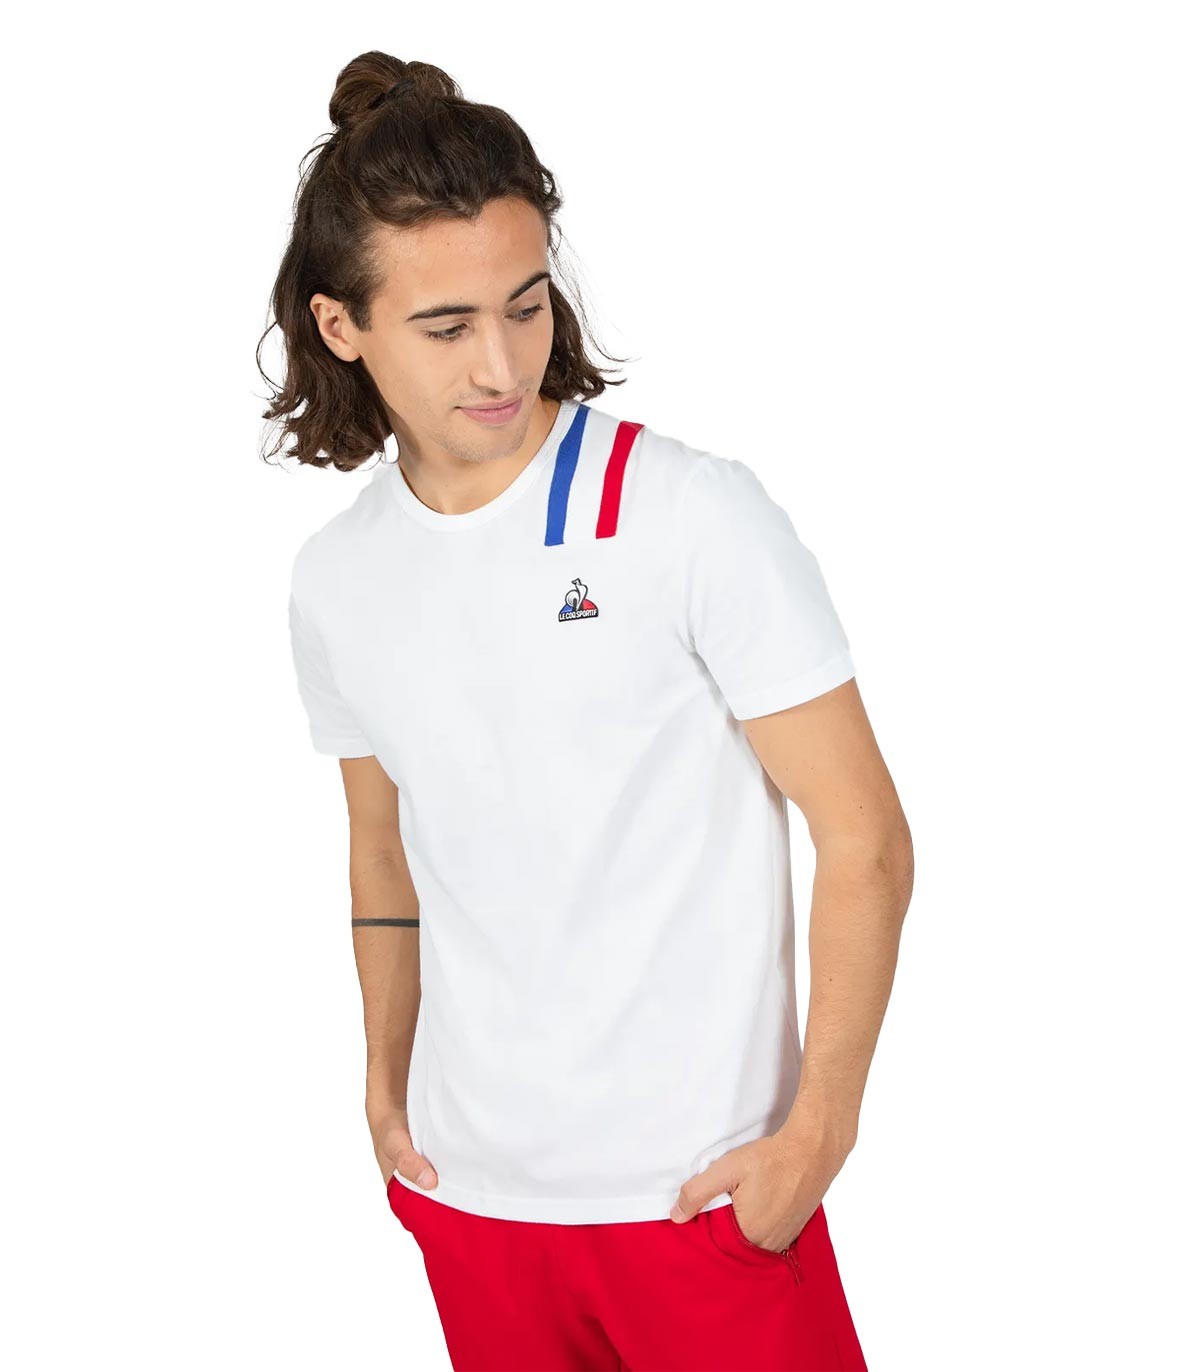 Le Coq Sportif - Camiseta Unisex Tricolore-Blanco - Blanco